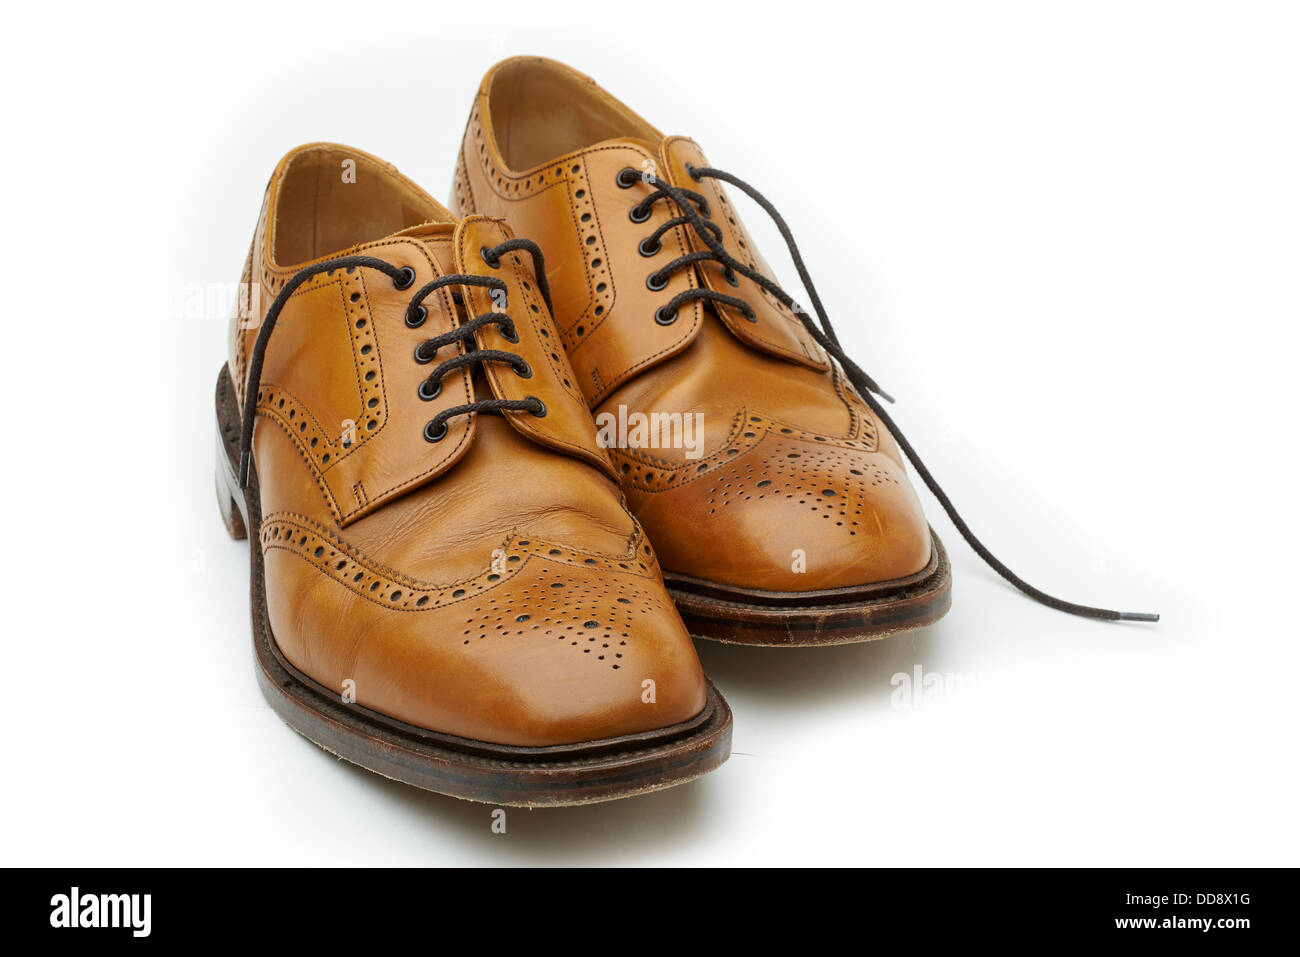 Loake Schuhe tan Brogues klassisch englischen Schuh beste Qualität Leder  Geschichte 1880 alte Design Studio geschnitten Stockfotografie - Alamy